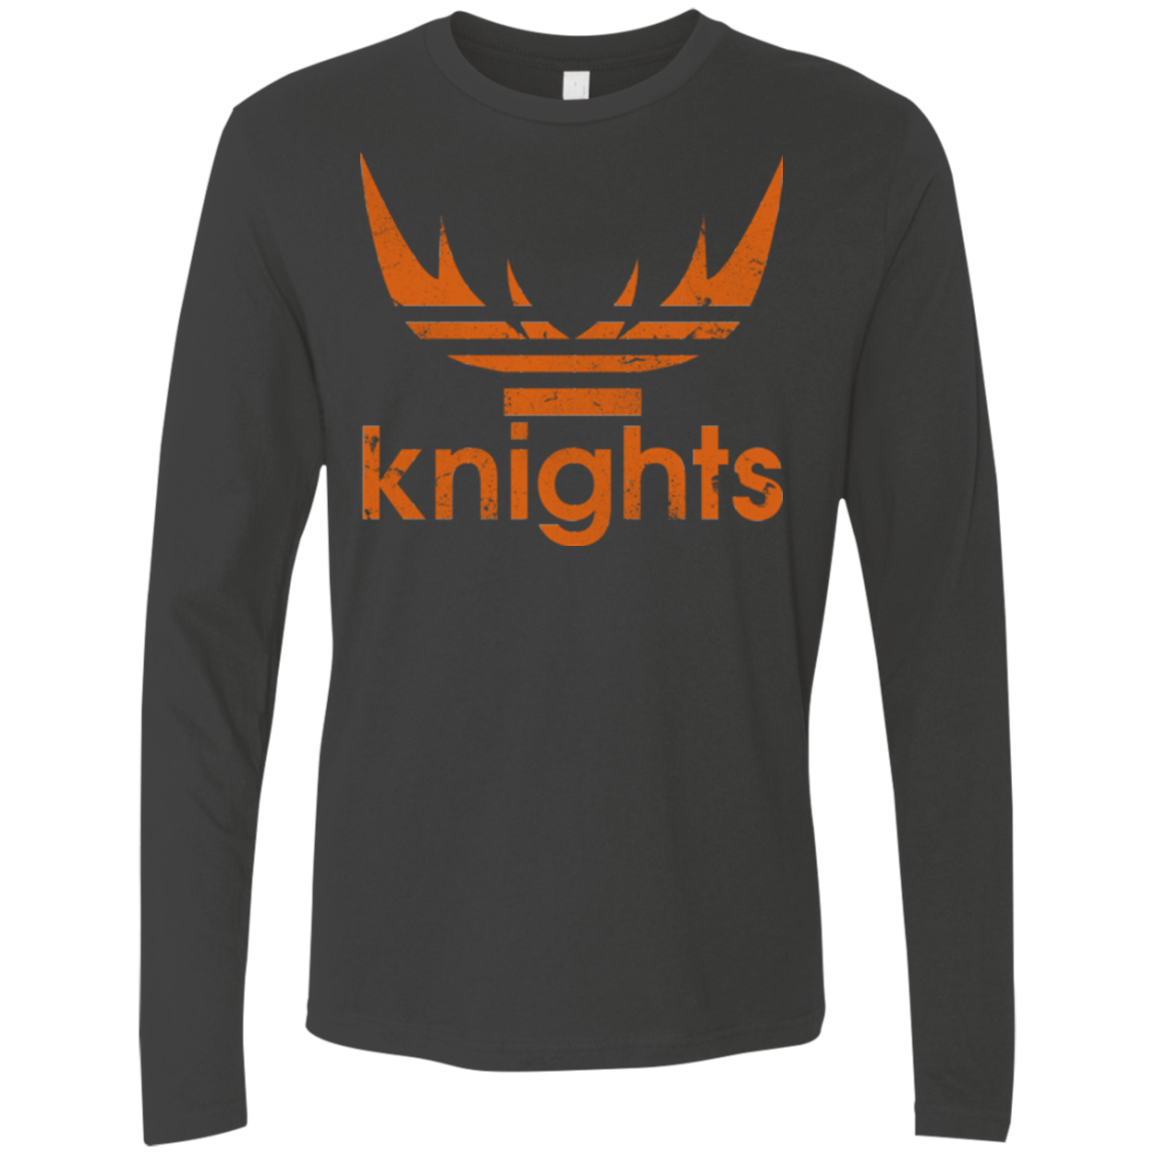 Knights Men's Premium Long Sleeve